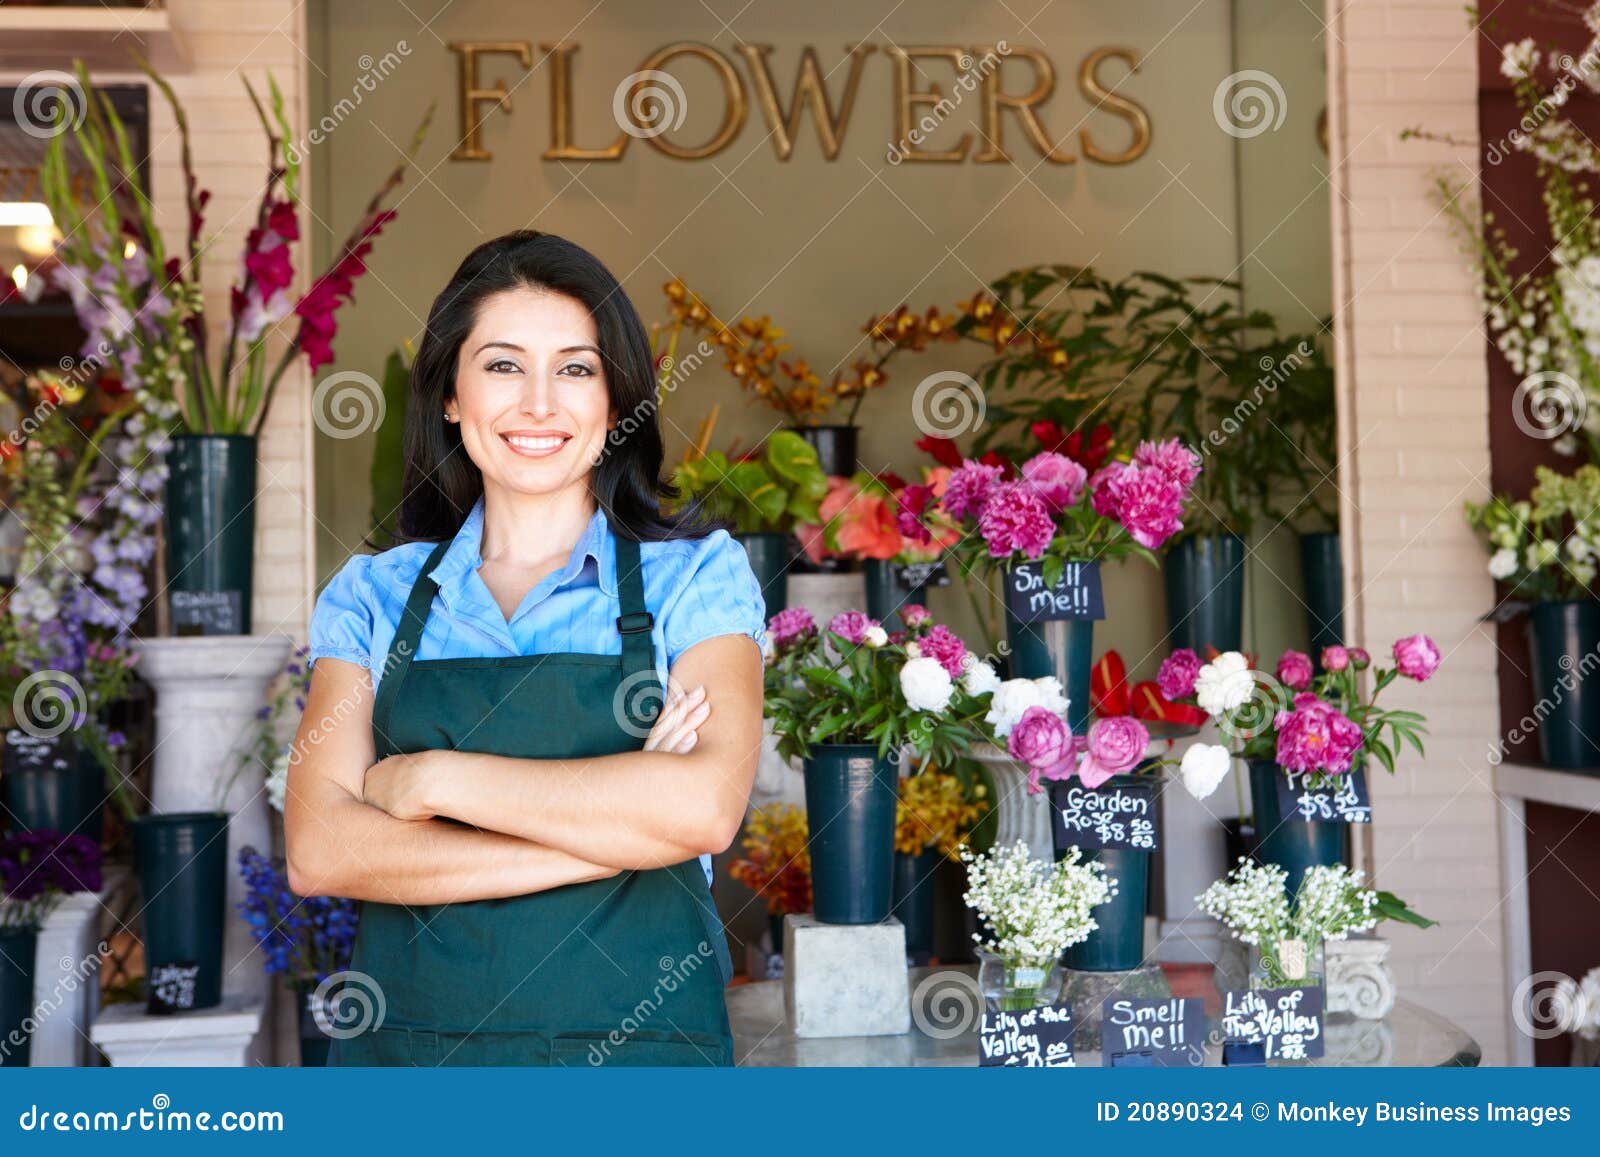 woman florist standing outside shop